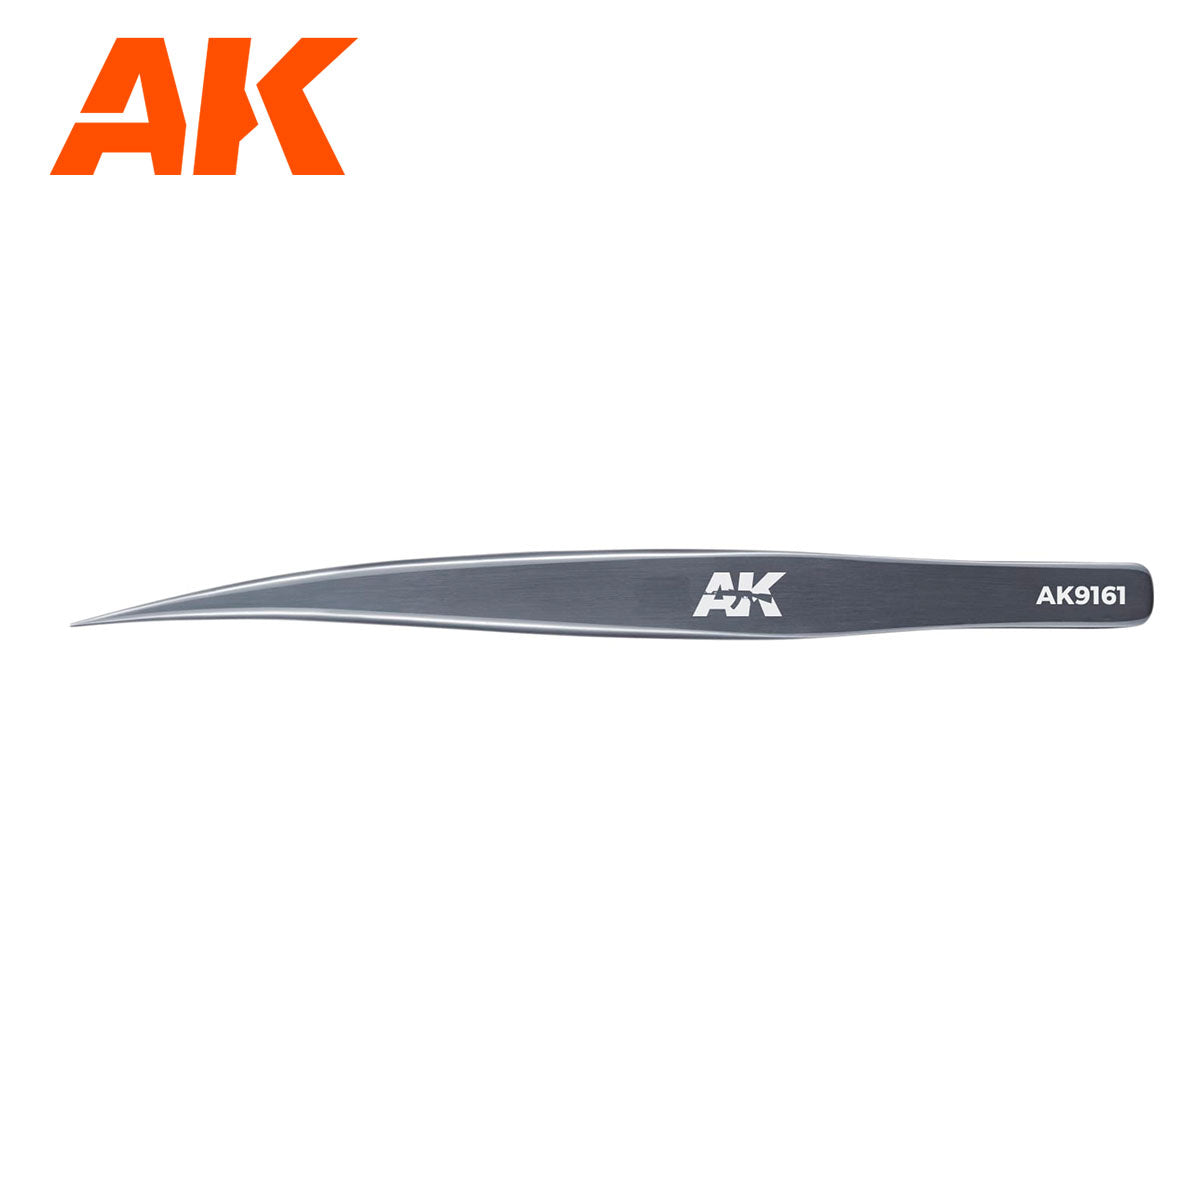 AK Interactive HG Angled Tweezers 01 AK9161 - Loaded Dice Barry Vale of Glamorgan CF64 3HD